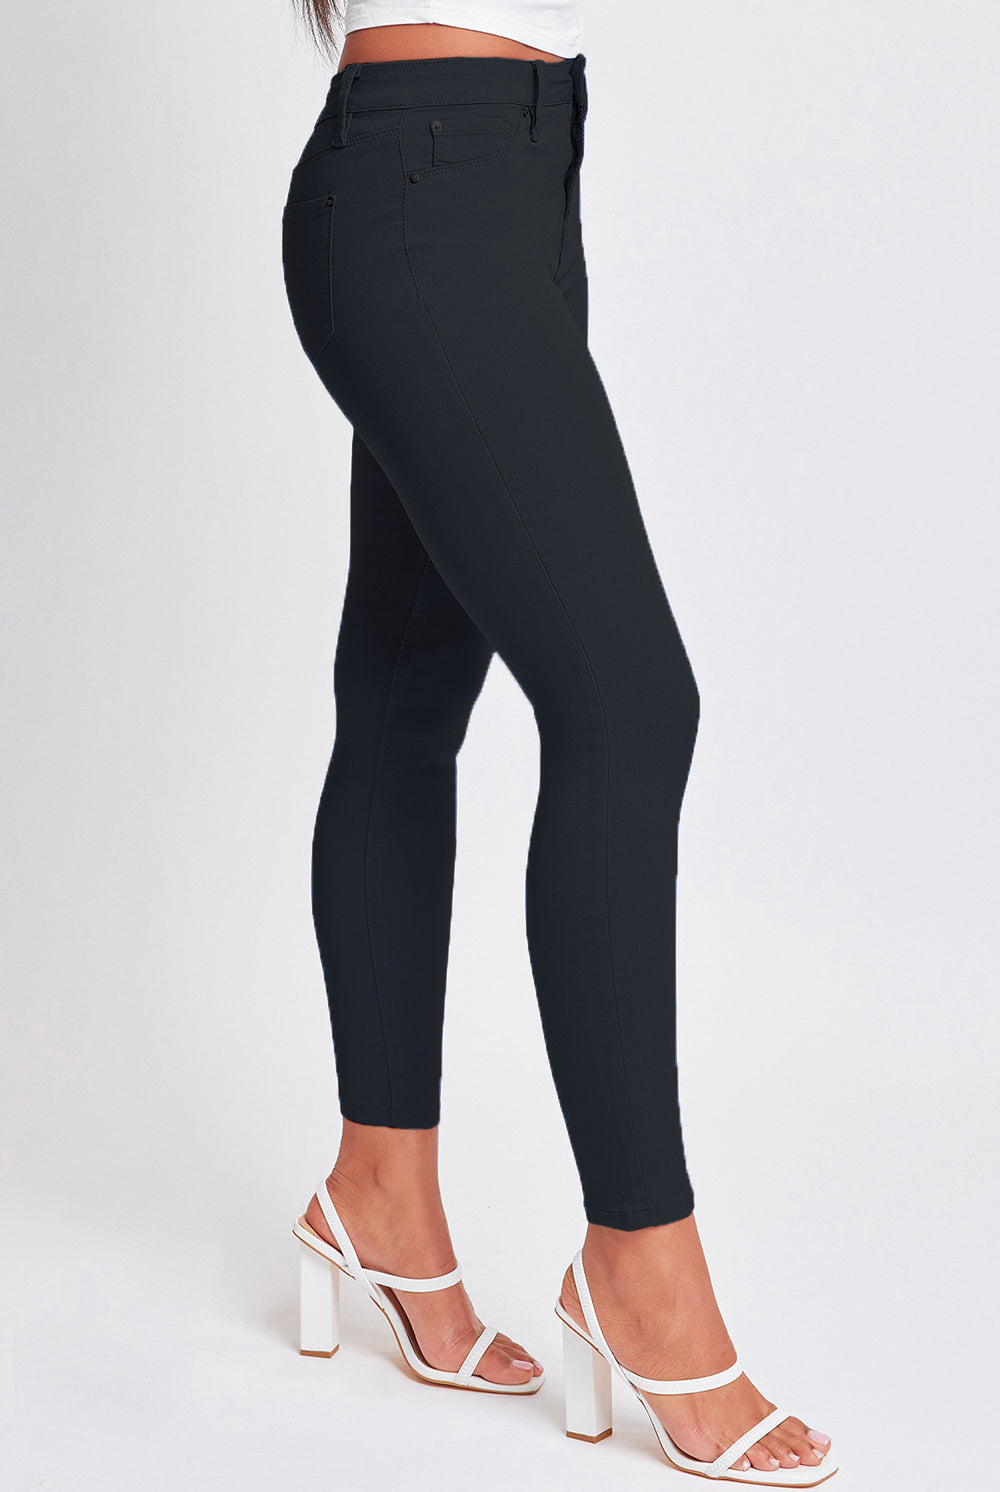 YMI Jeanswear Full Size Hyperstretch Mid-Rise Skinny Pants-Krush Kandy, Women's Online Fashion Boutique Located in Phoenix, Arizona (Scottsdale Area)